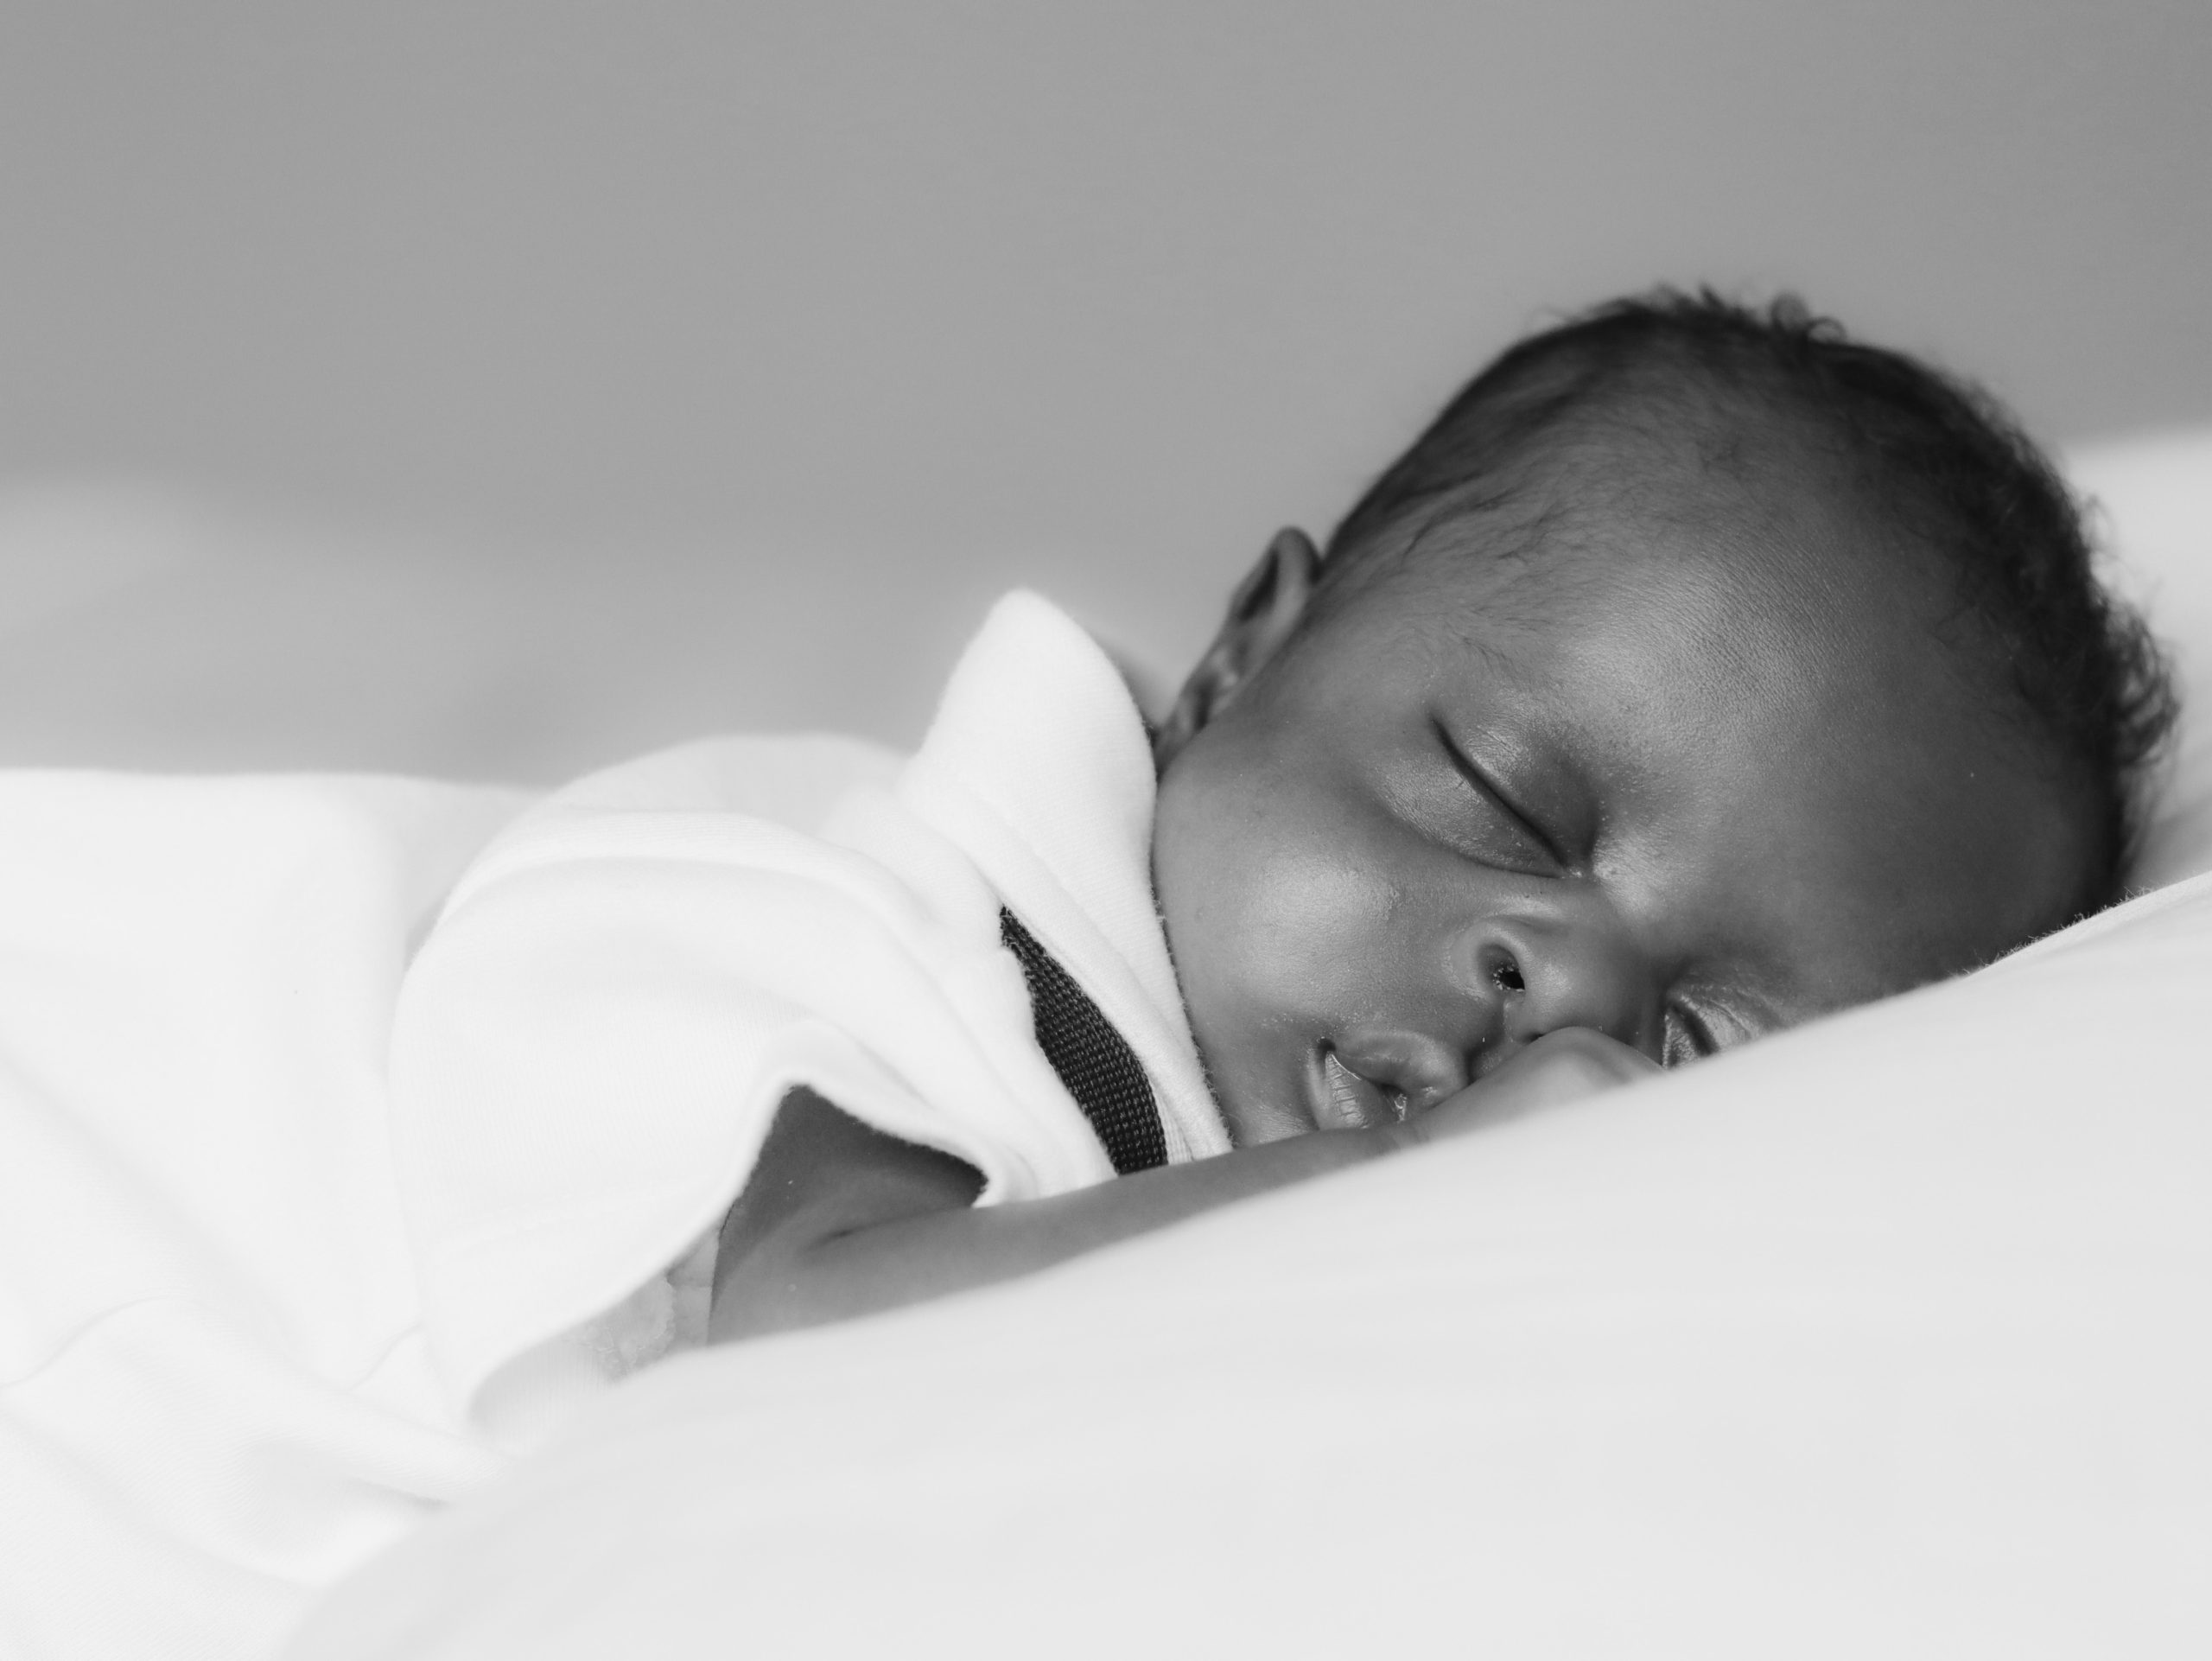 Newborn baby sleeping | Photo by Zoe Graham on Unsplash